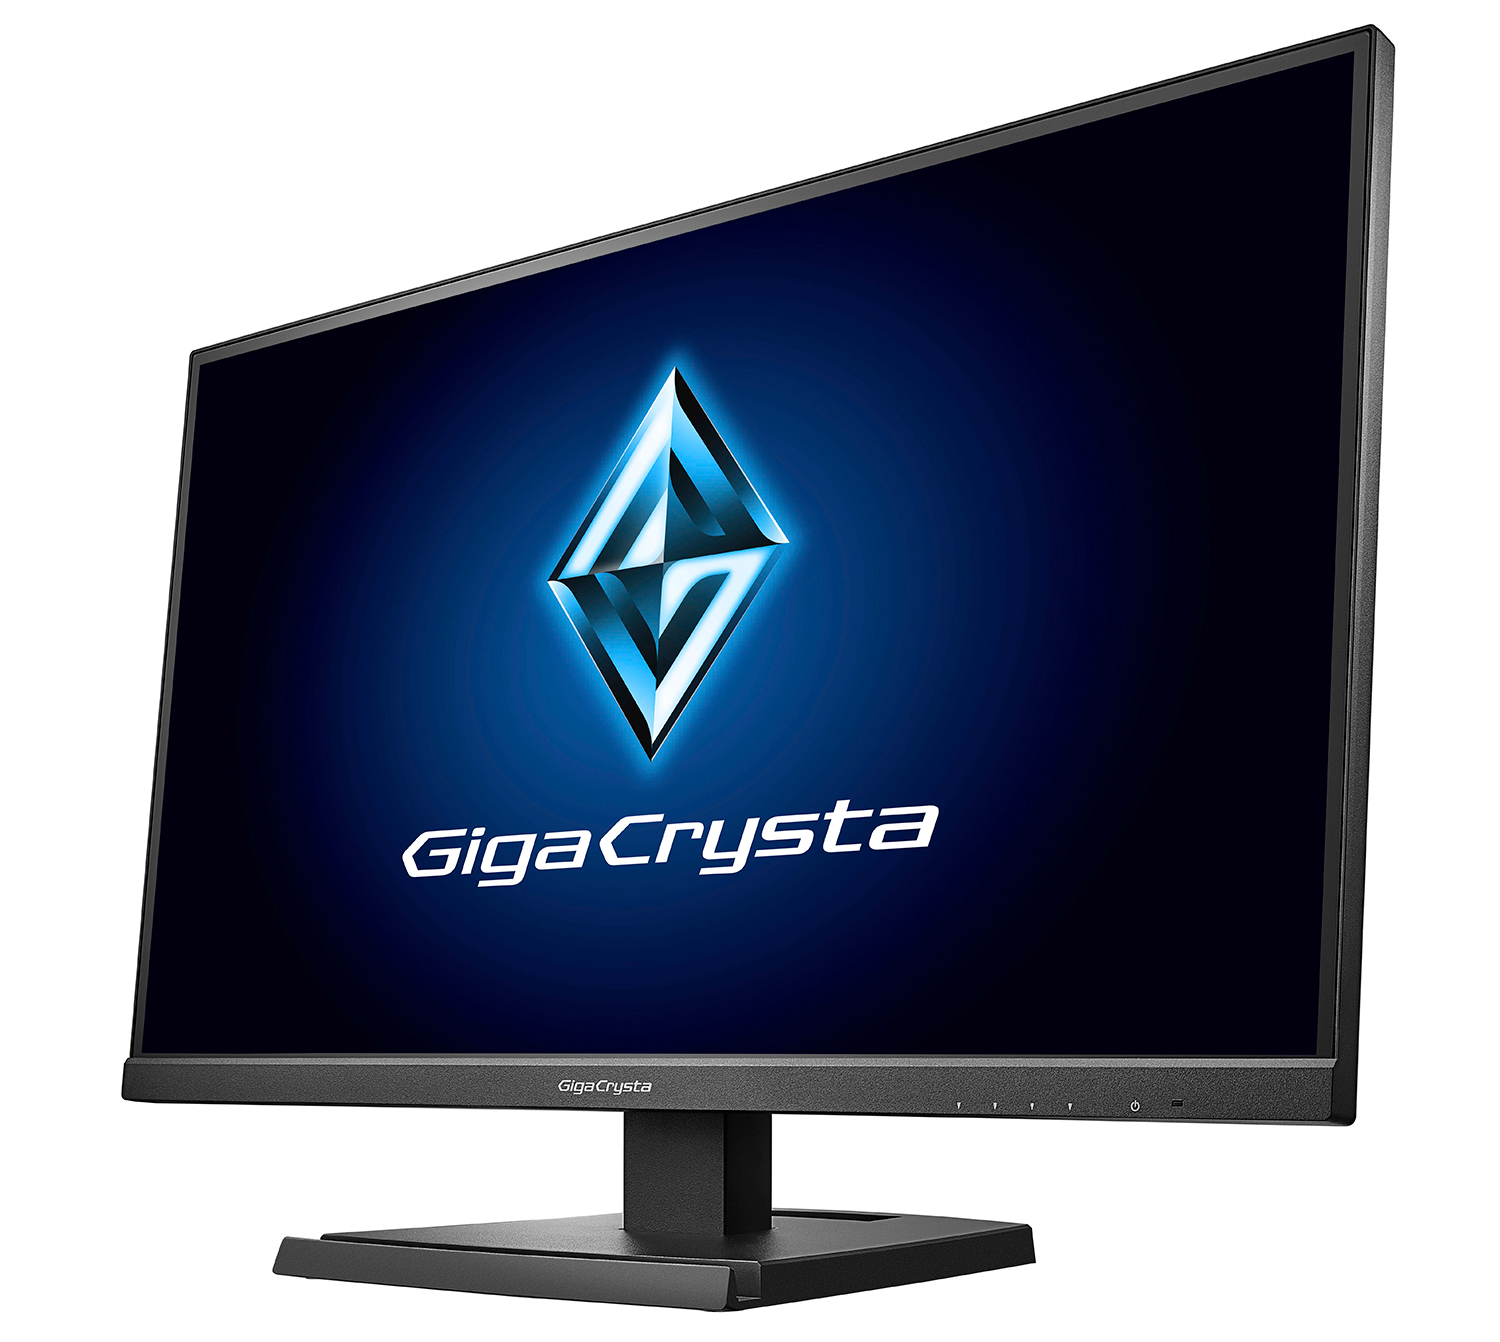 LCD-GCU271XDB | ゲーミングモニター「GigaCrysta」 | IODATA アイ